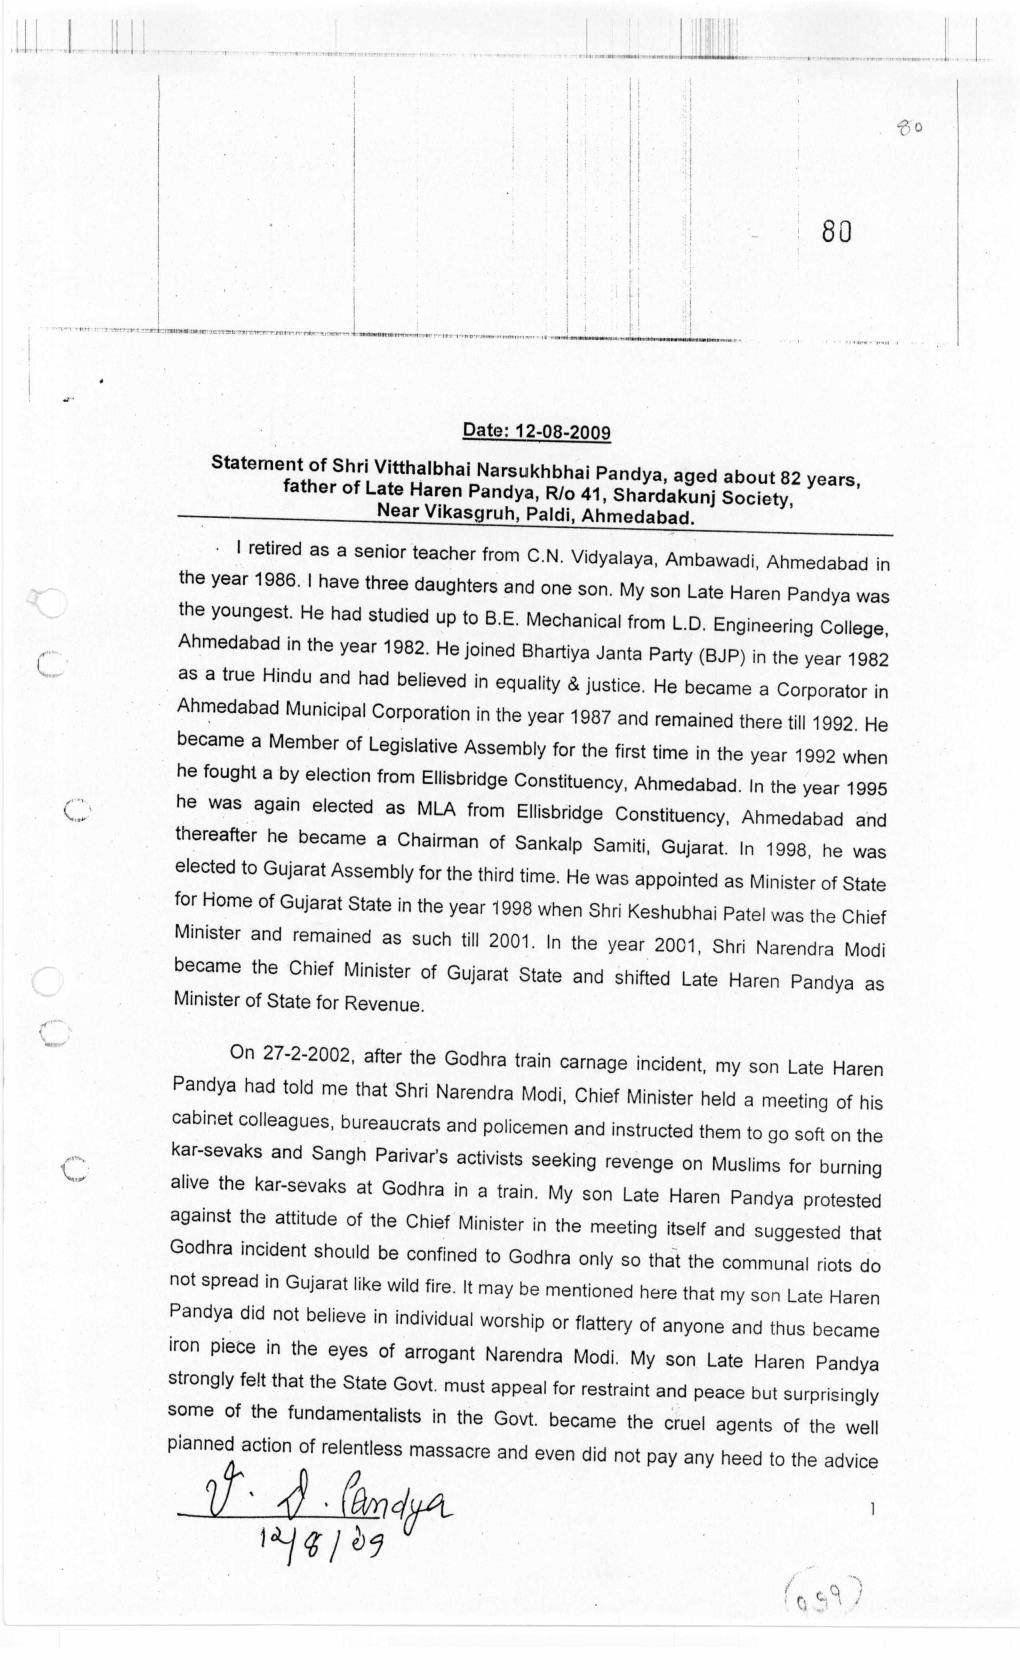 Date: 12-08-2009 Statement of Shri Vitthalbhai Narsukhbhai Pandya